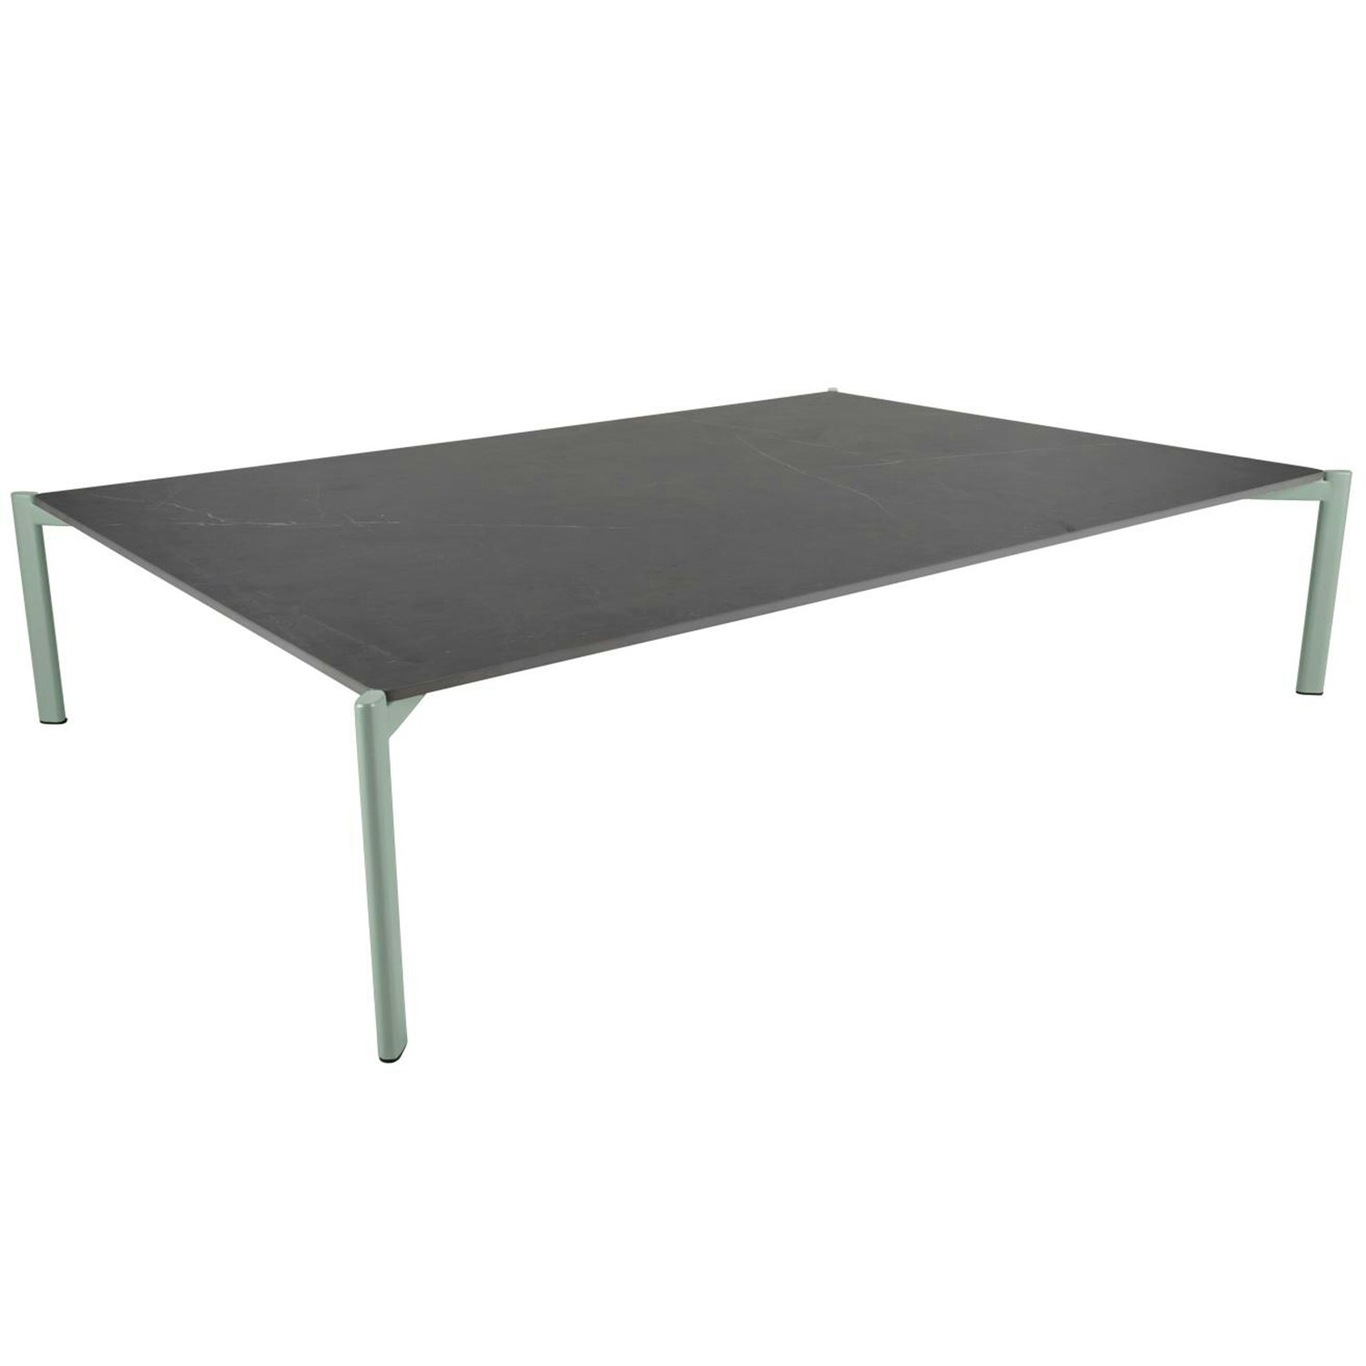 Hallavara Coffee Table 162x112 cm, Green